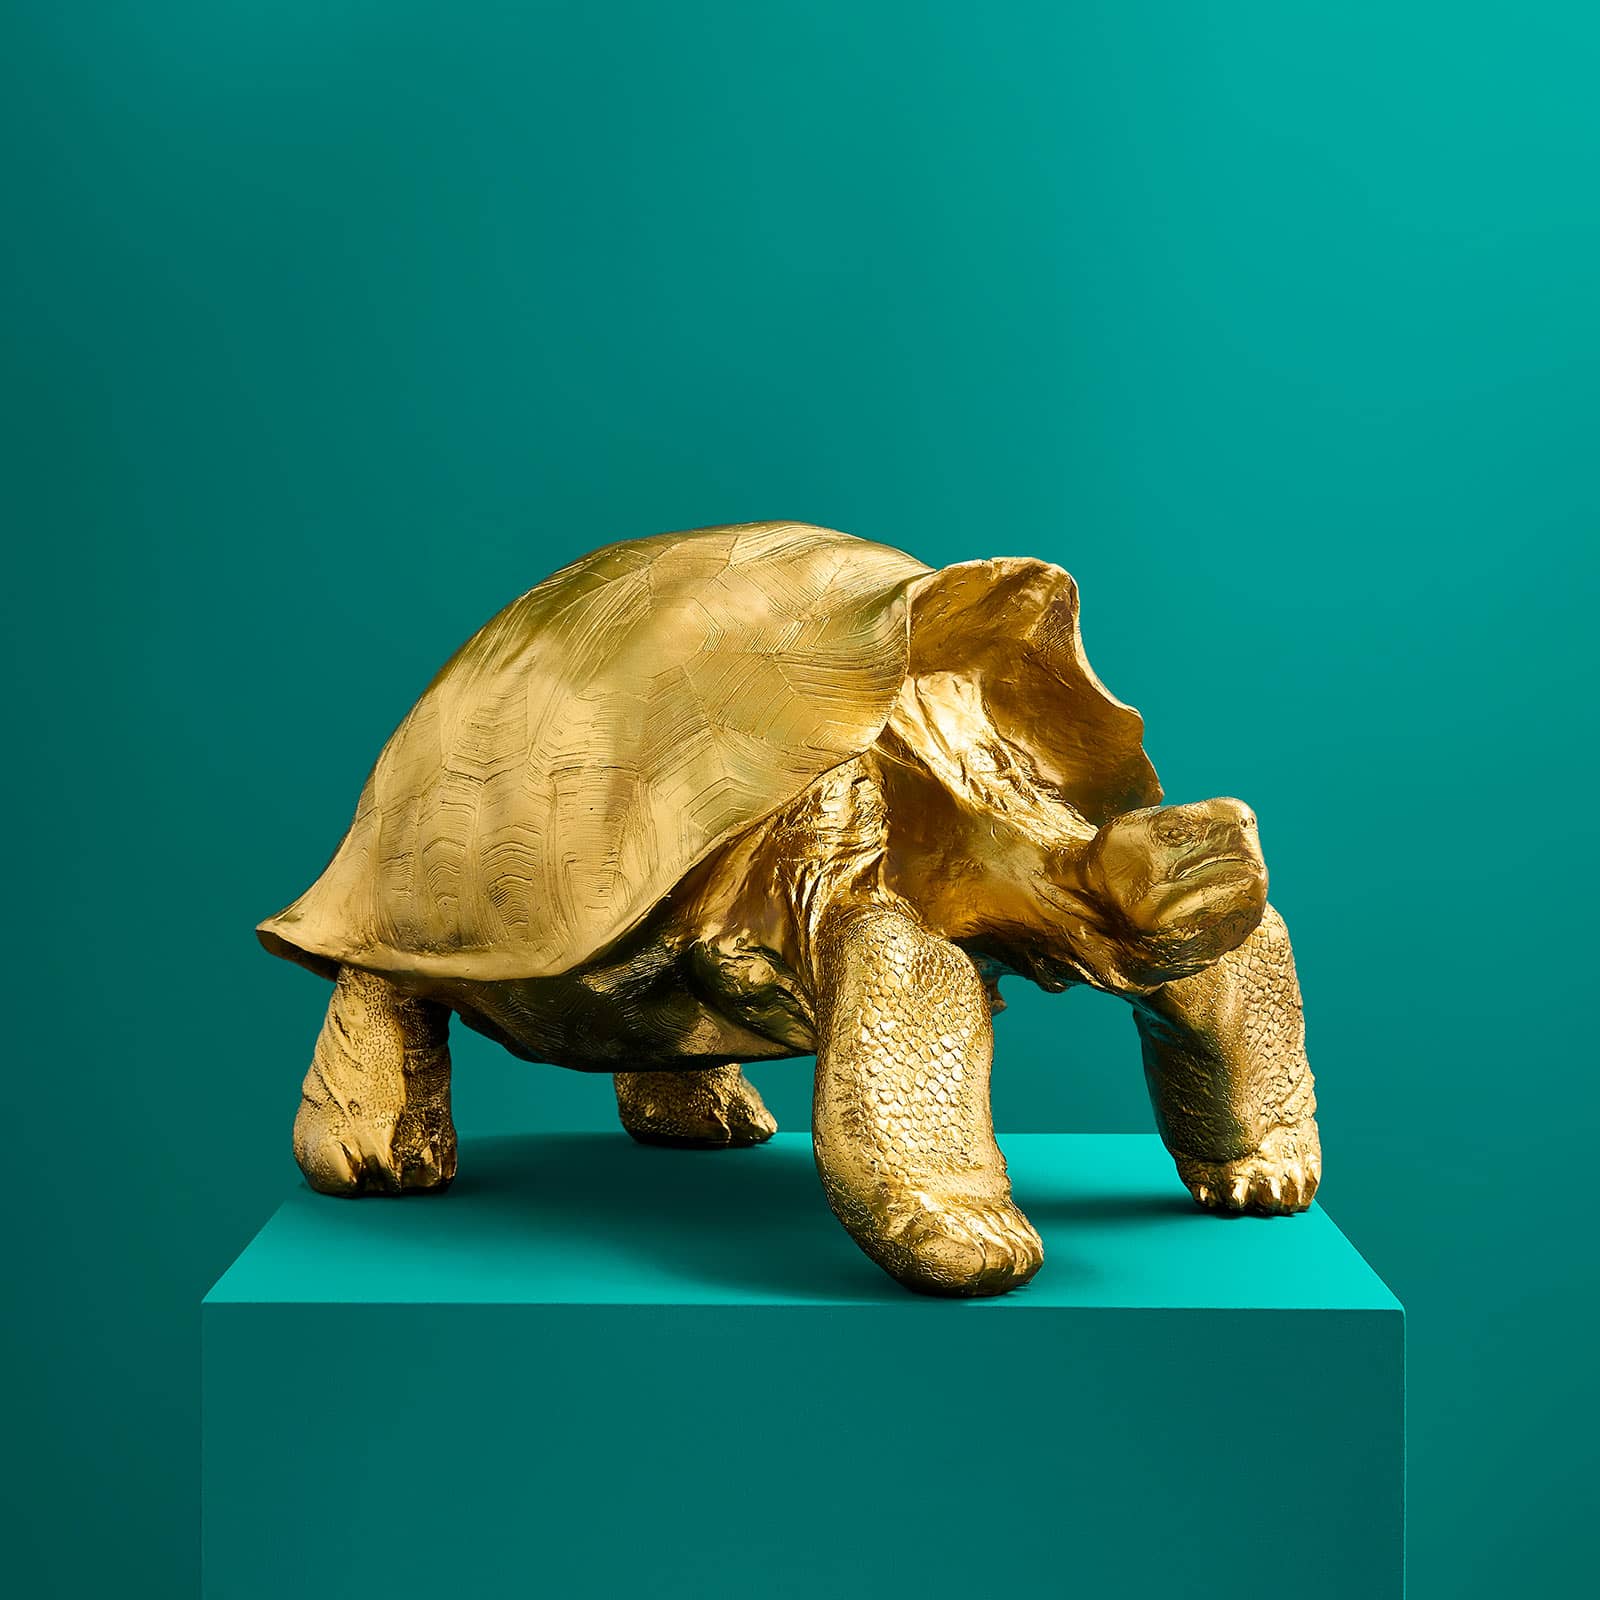 Decorative object / decorative figure turtle Stormy, gold, polyresin, 56x36x33 cm